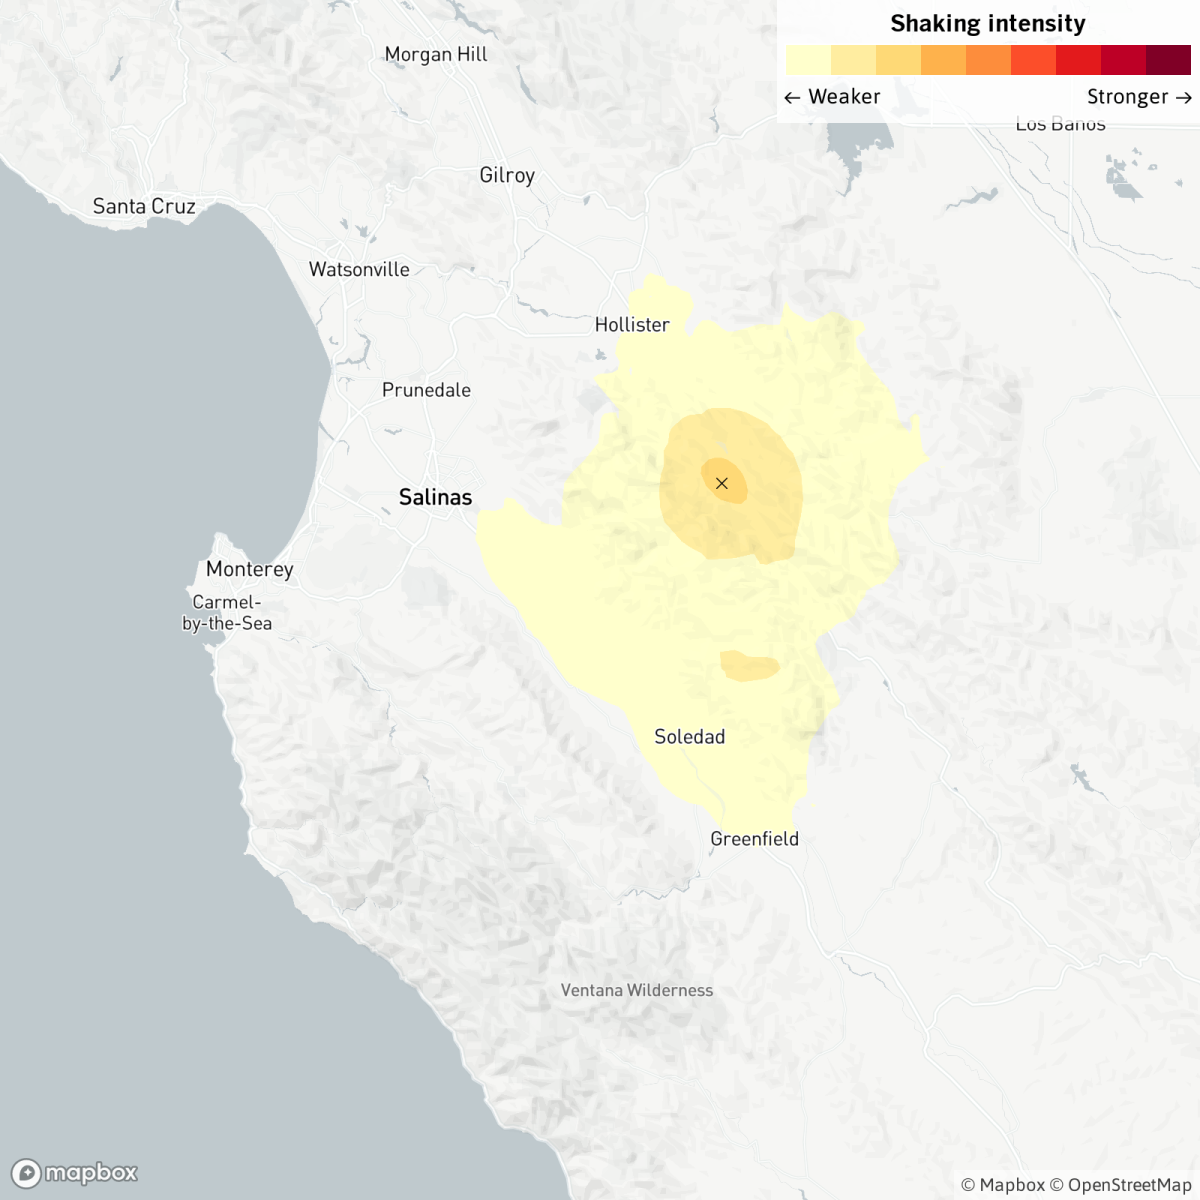 Magnitude 4.0 earthquake near Hollister, Calif.